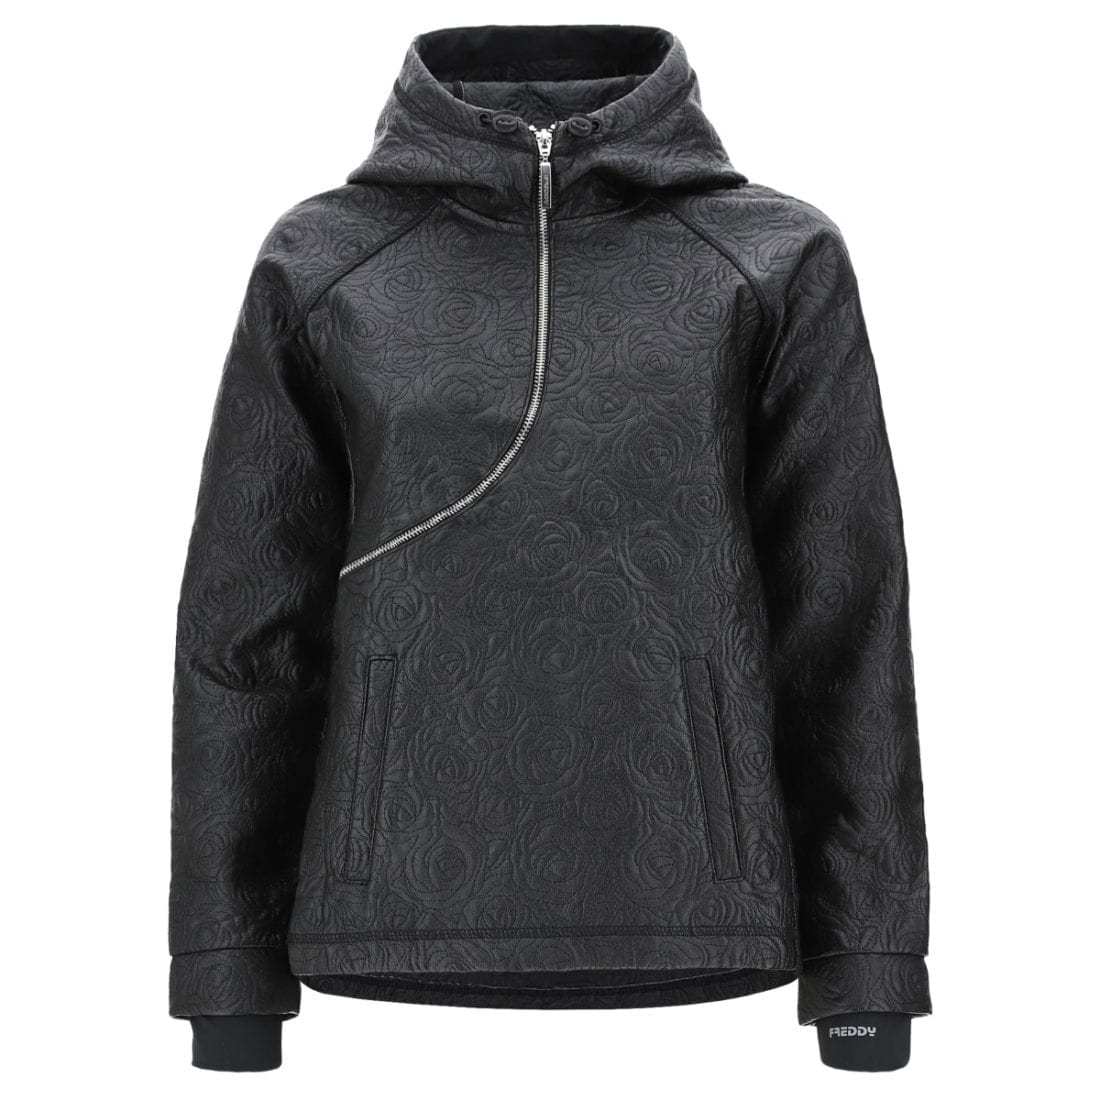 FREDDY Hooded Jacket  – Curved Zip – CURVE2F901 -Black